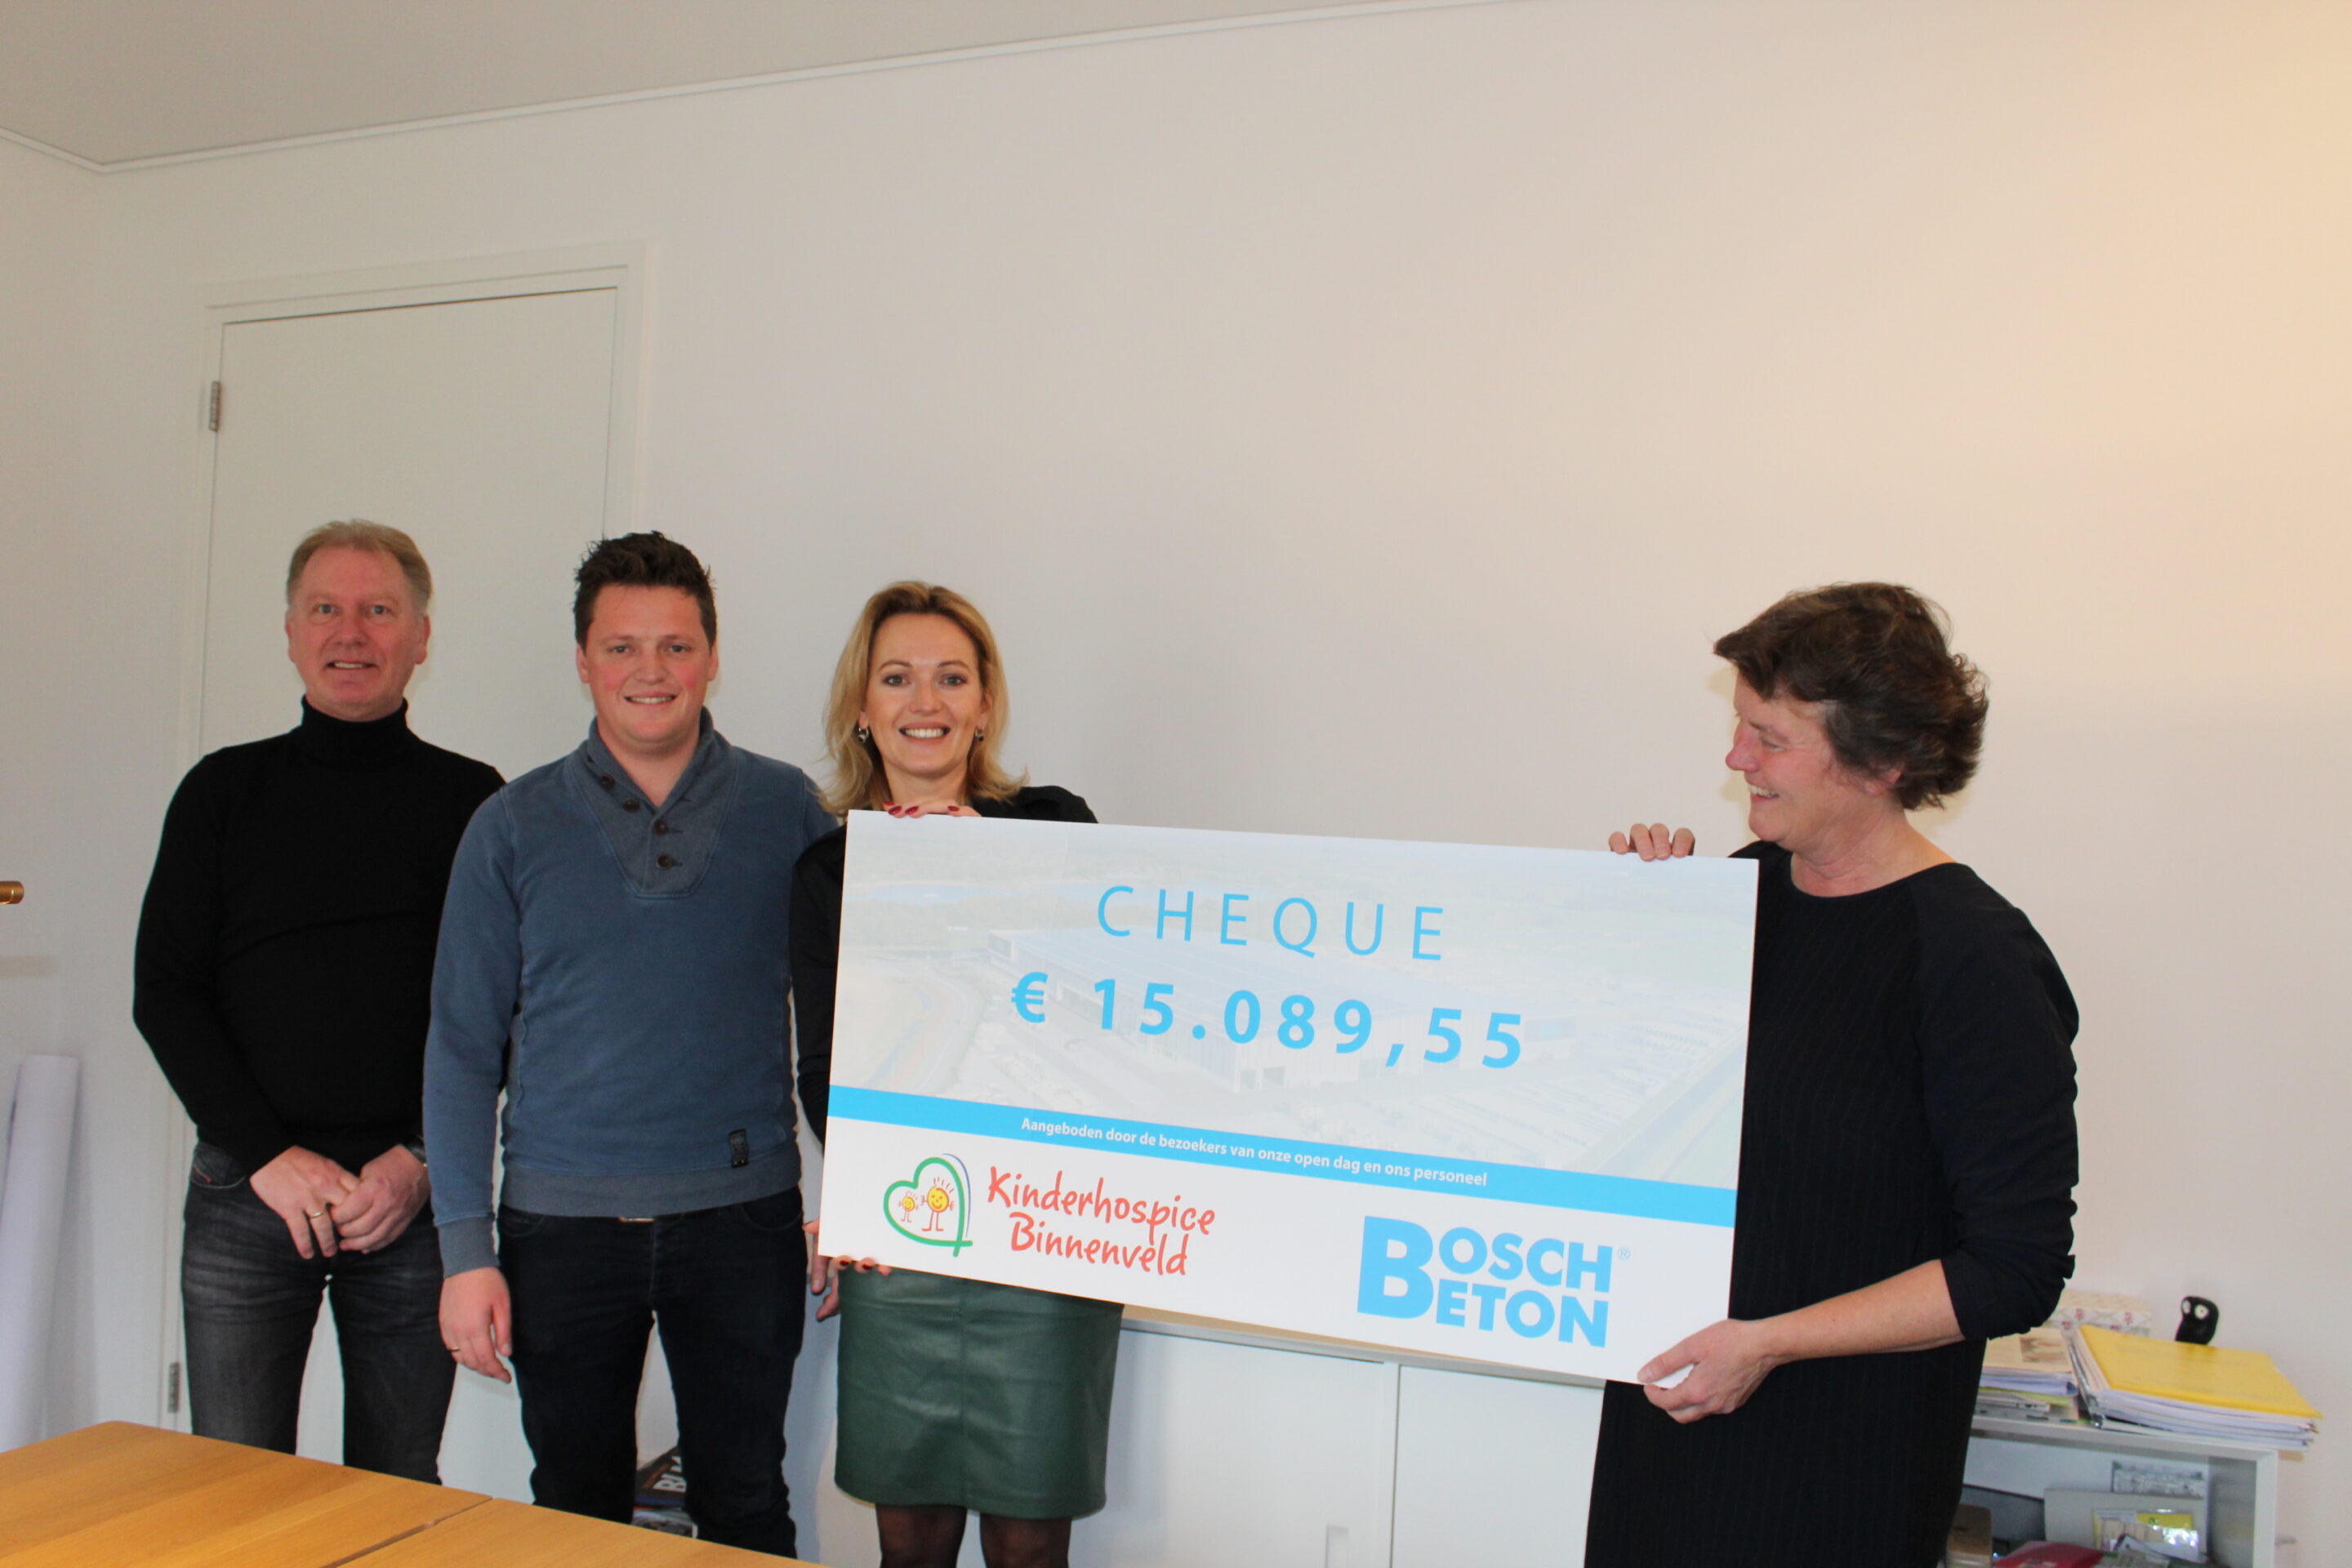 Bosch Beton - Sponsoring kinderhospice